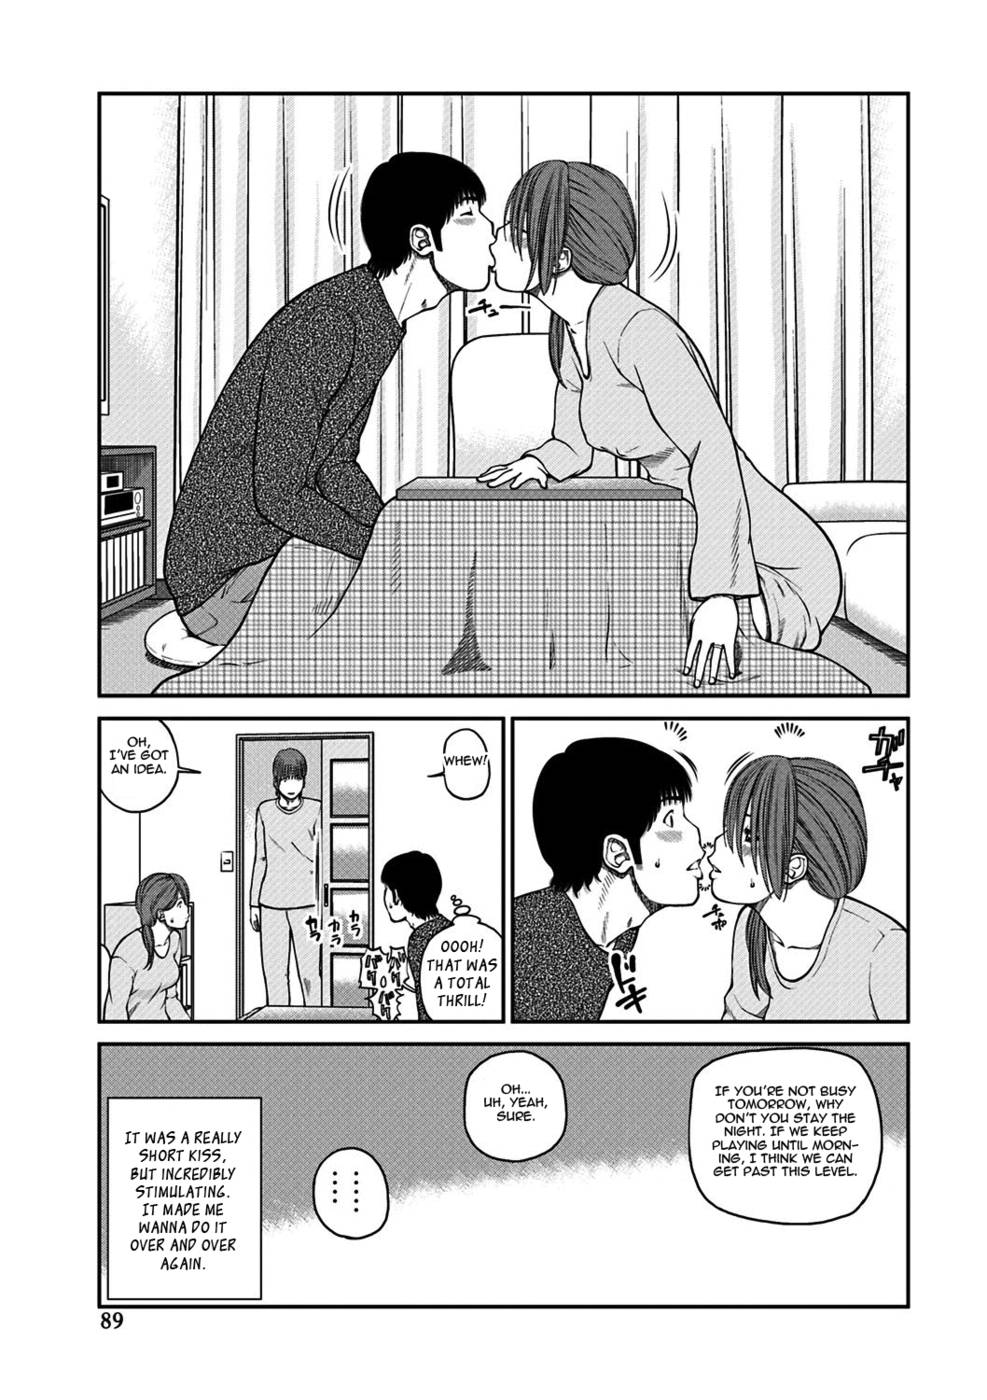 Sexxxxxxxxxxmom - 33 Year Old Unsatisfied Wife-Chapter 5-Under The Kotatsu-Hentai Manga  Hentai Comic - Page: 6 - Online porn video at mobile